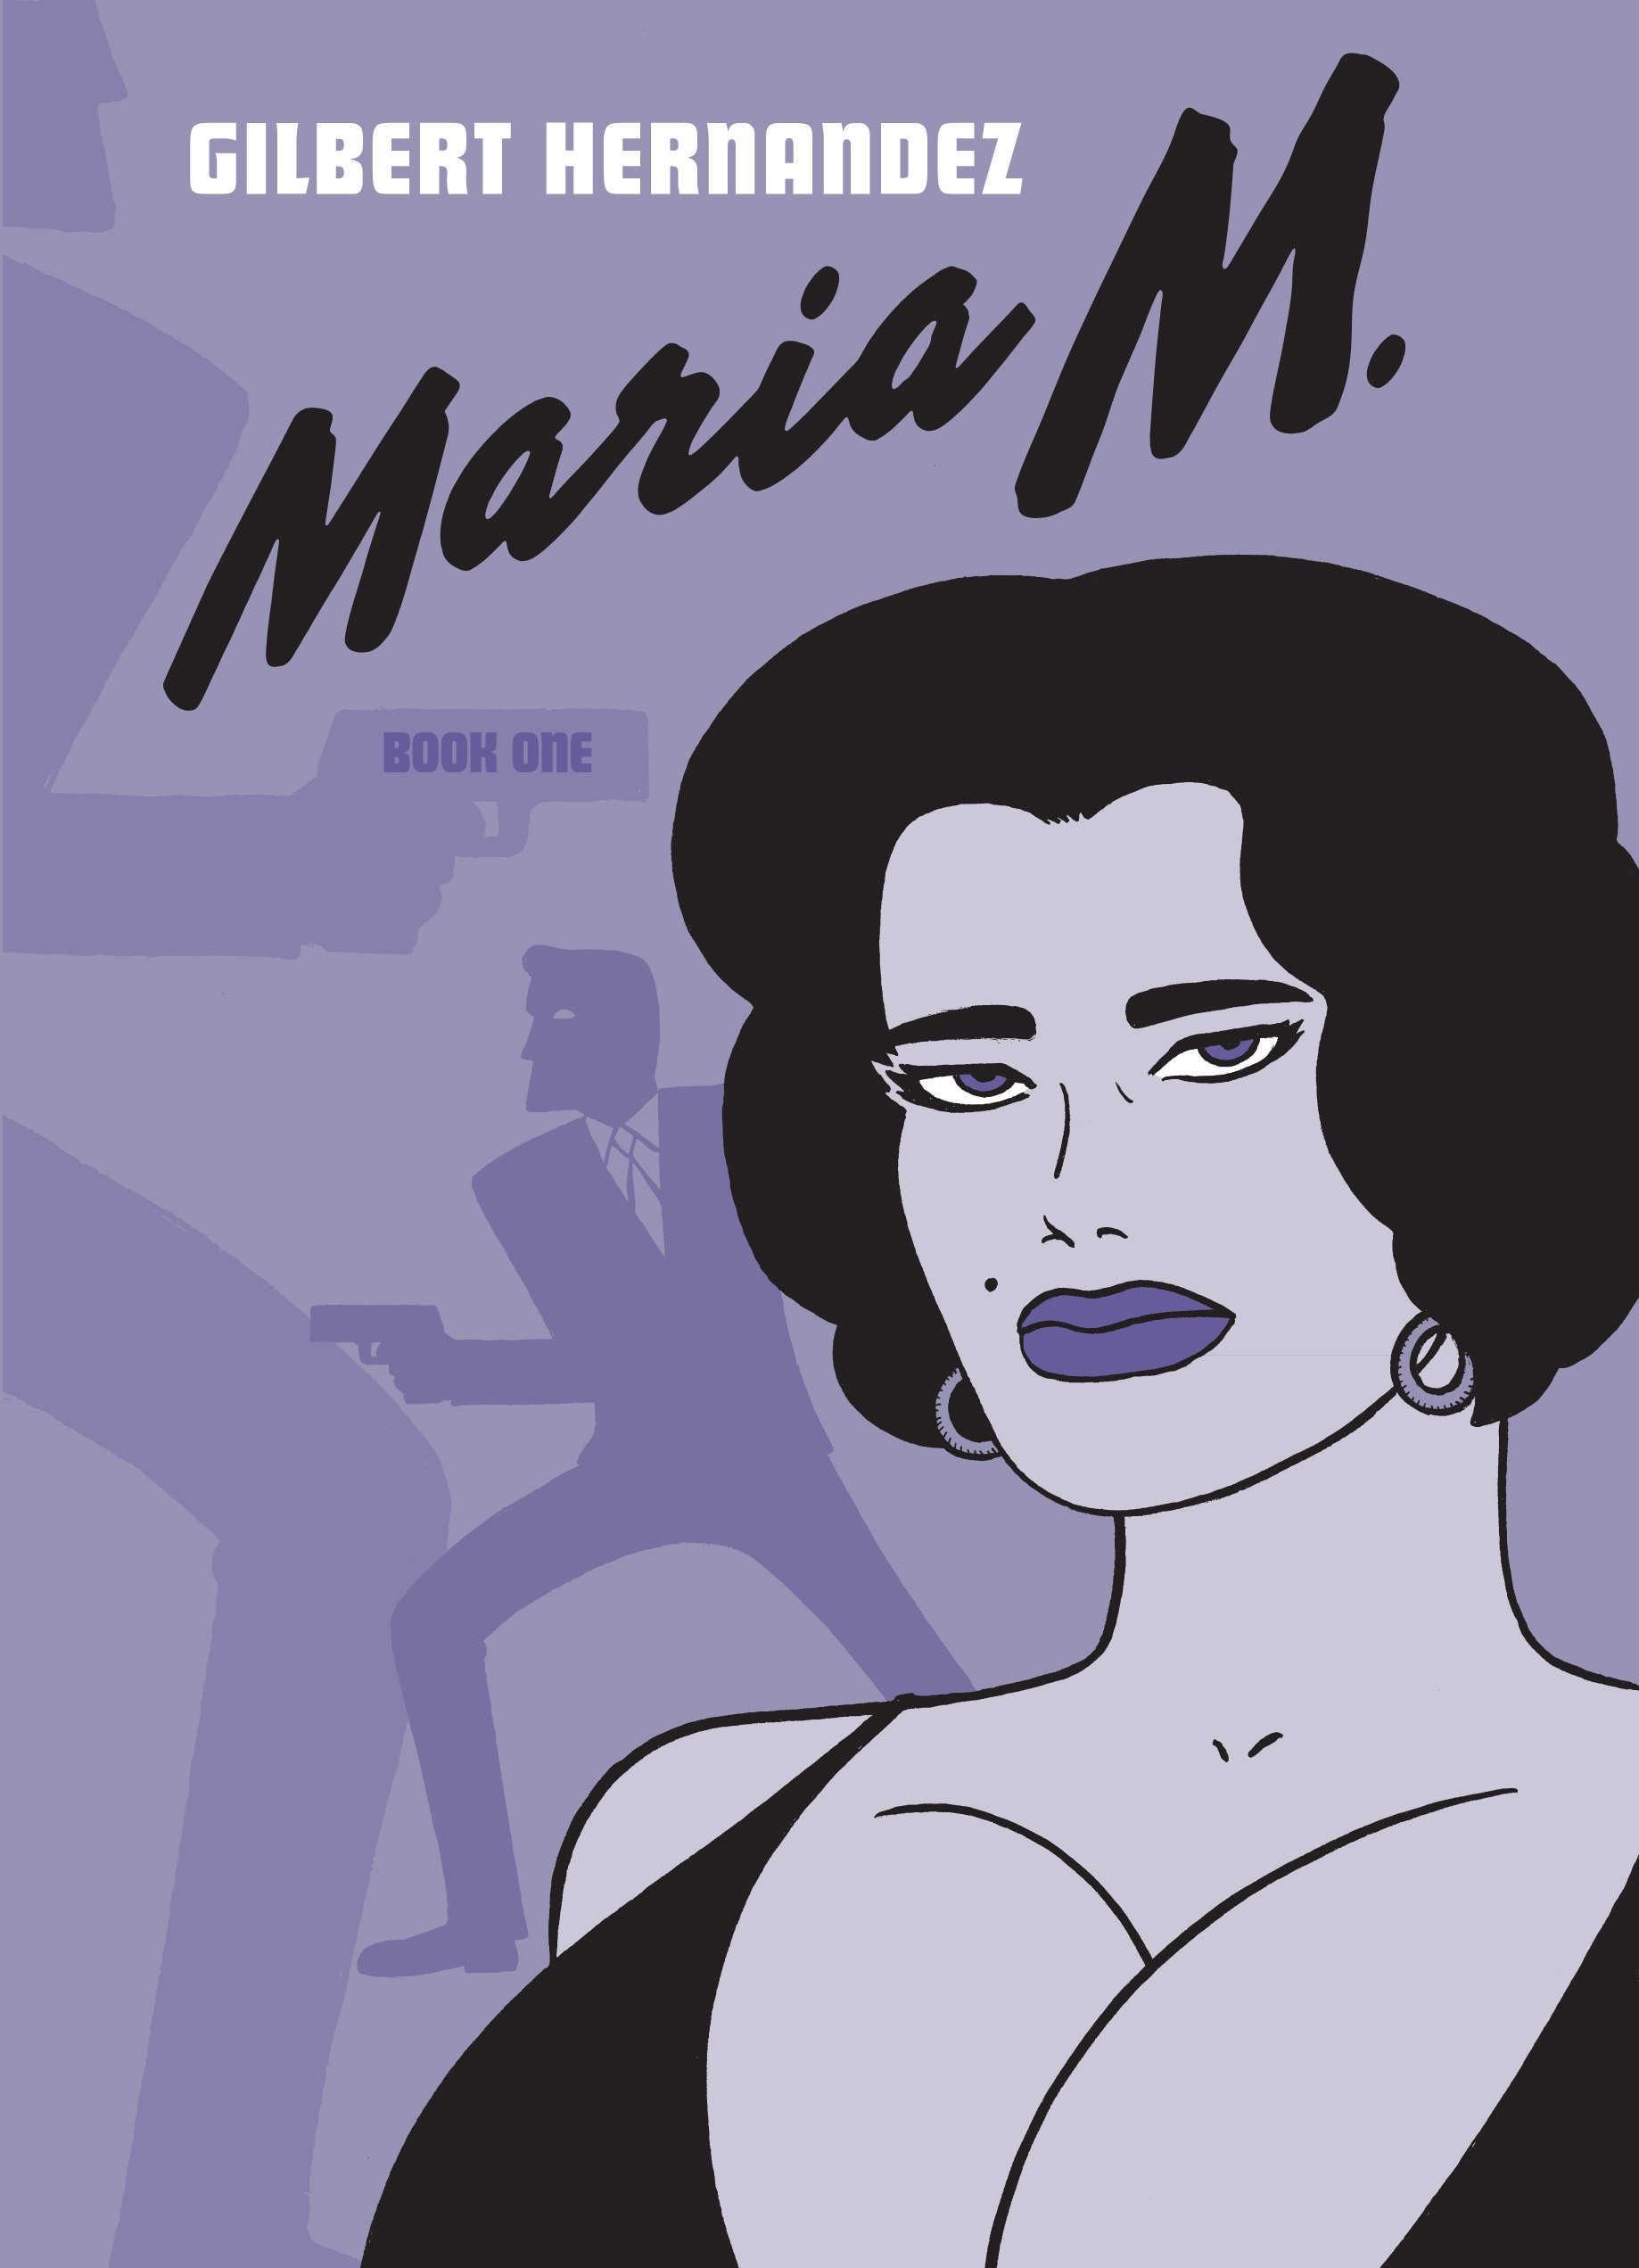 Read online Maria M. comic -  Issue # TPB - 1